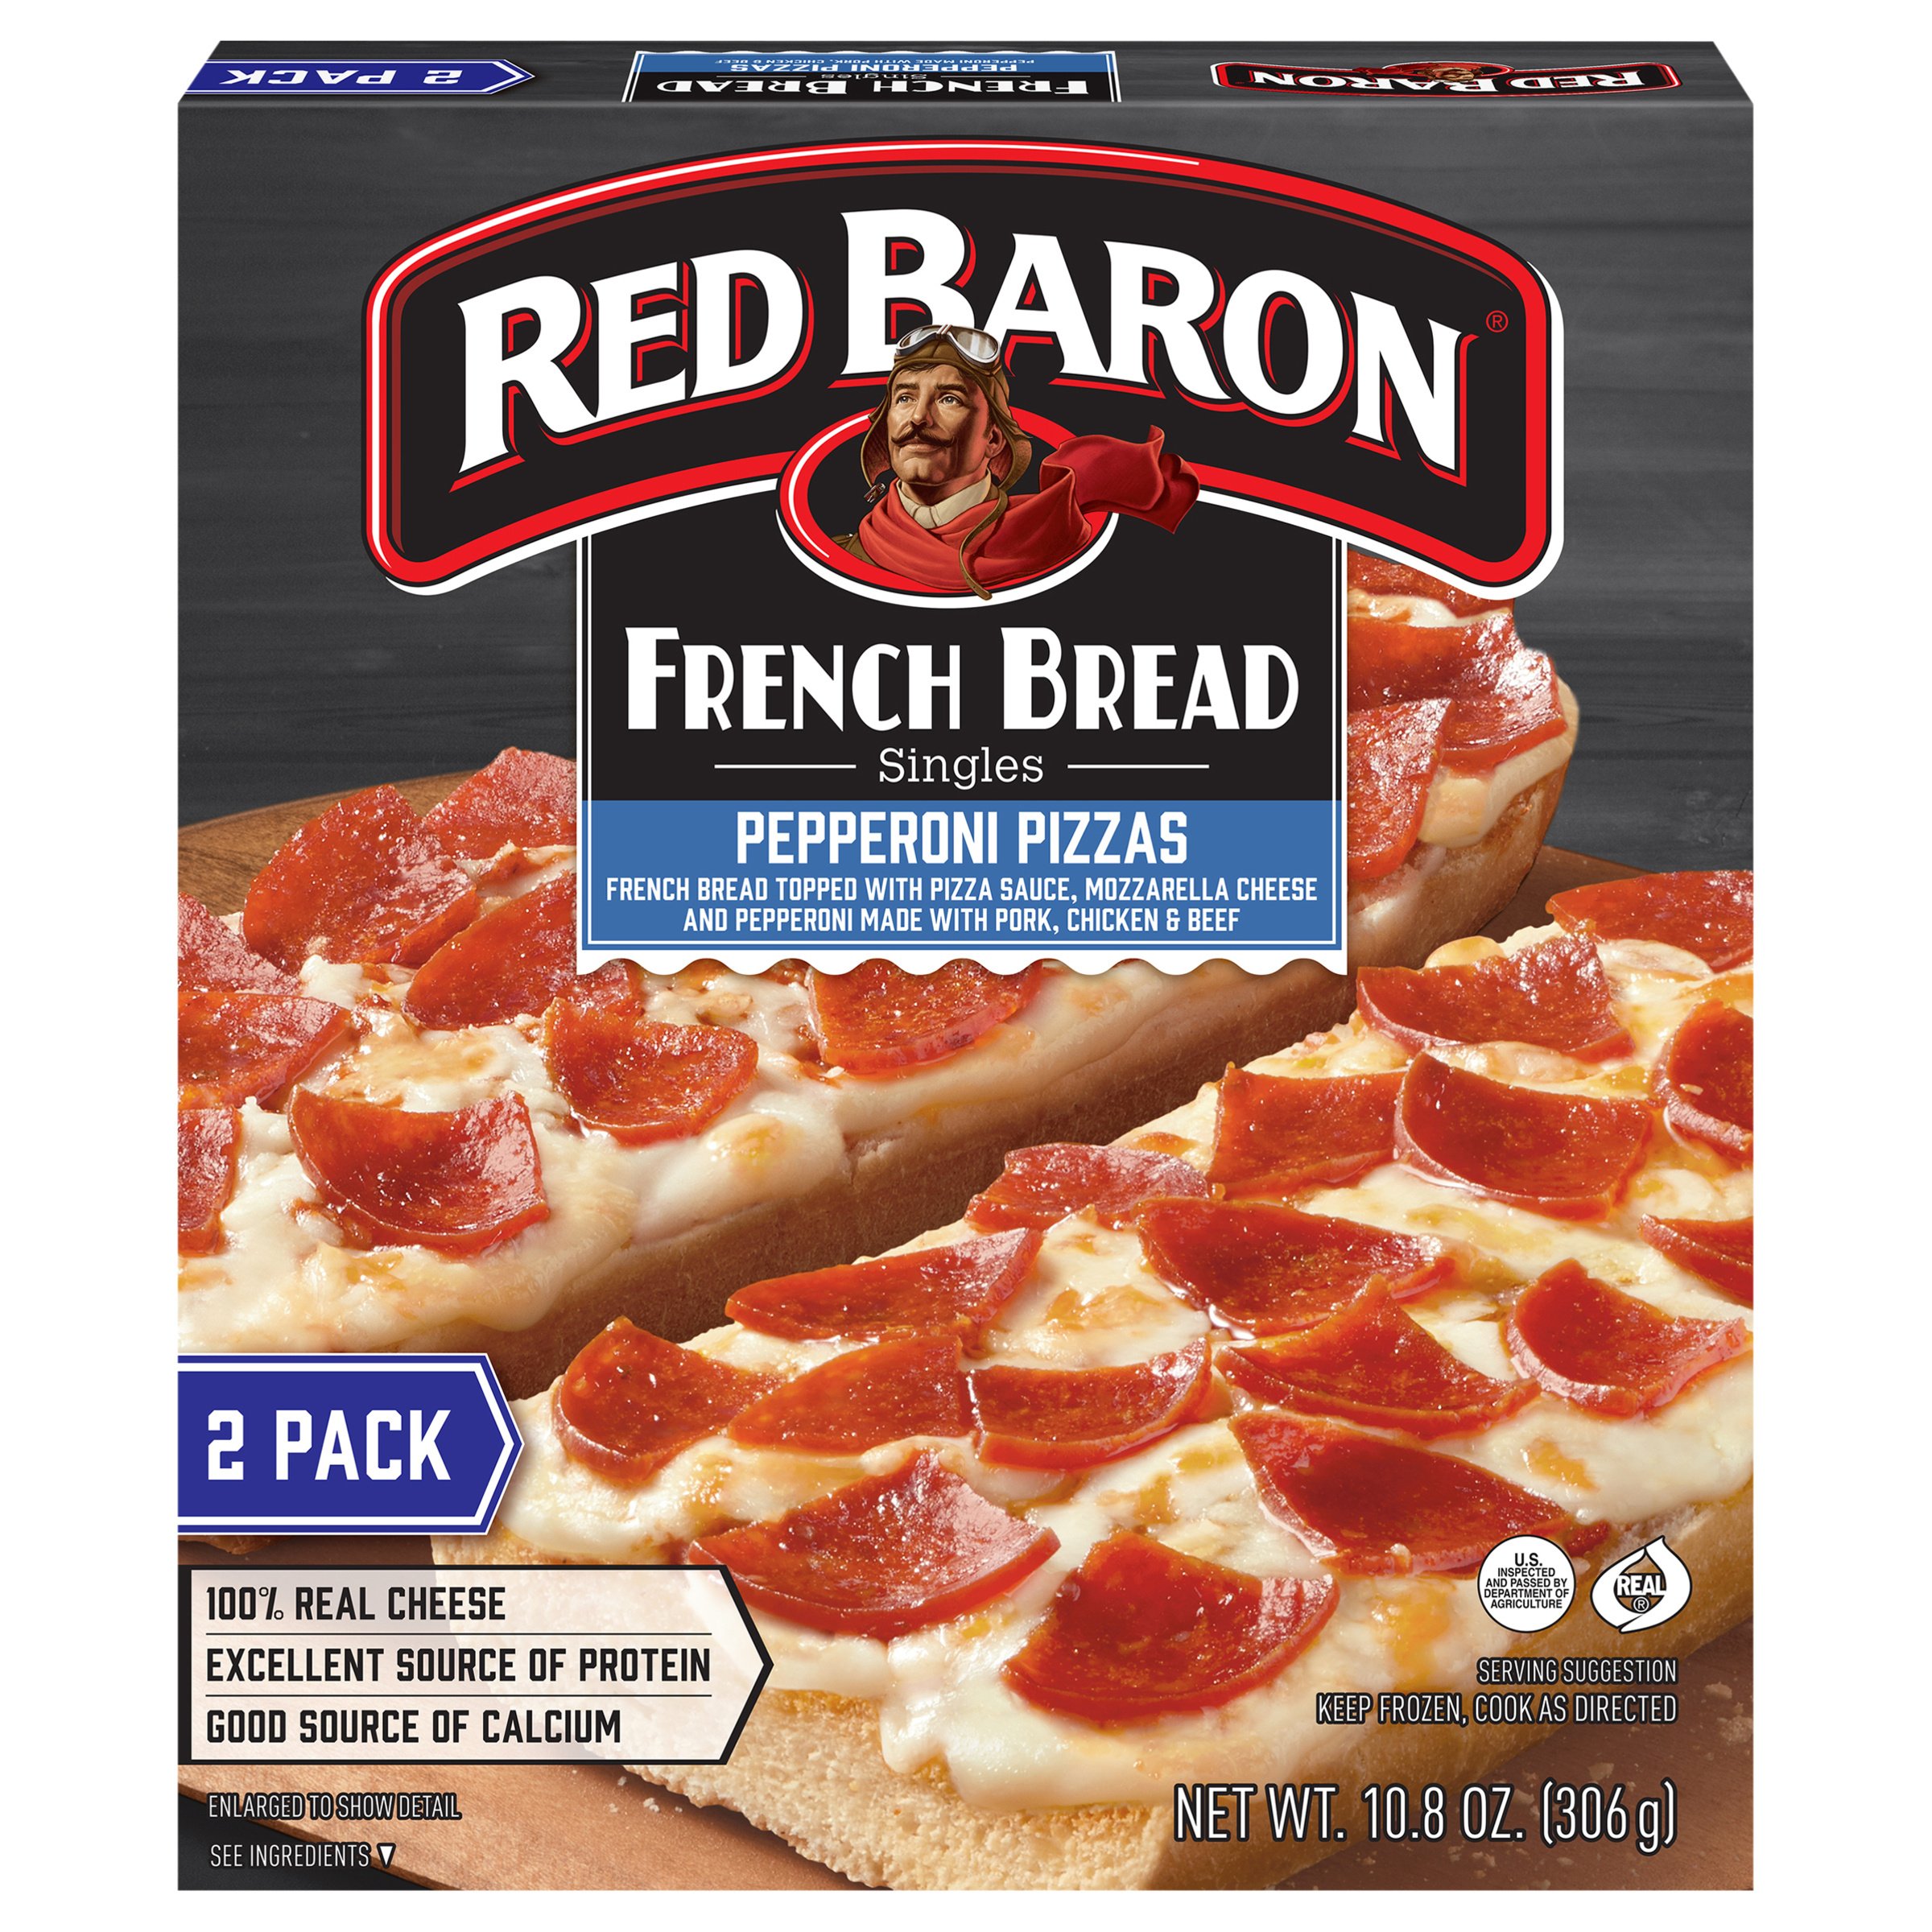 Red Baron Brick Oven Crust Pepperoni Pizza - Shop Pizza at H-E-B